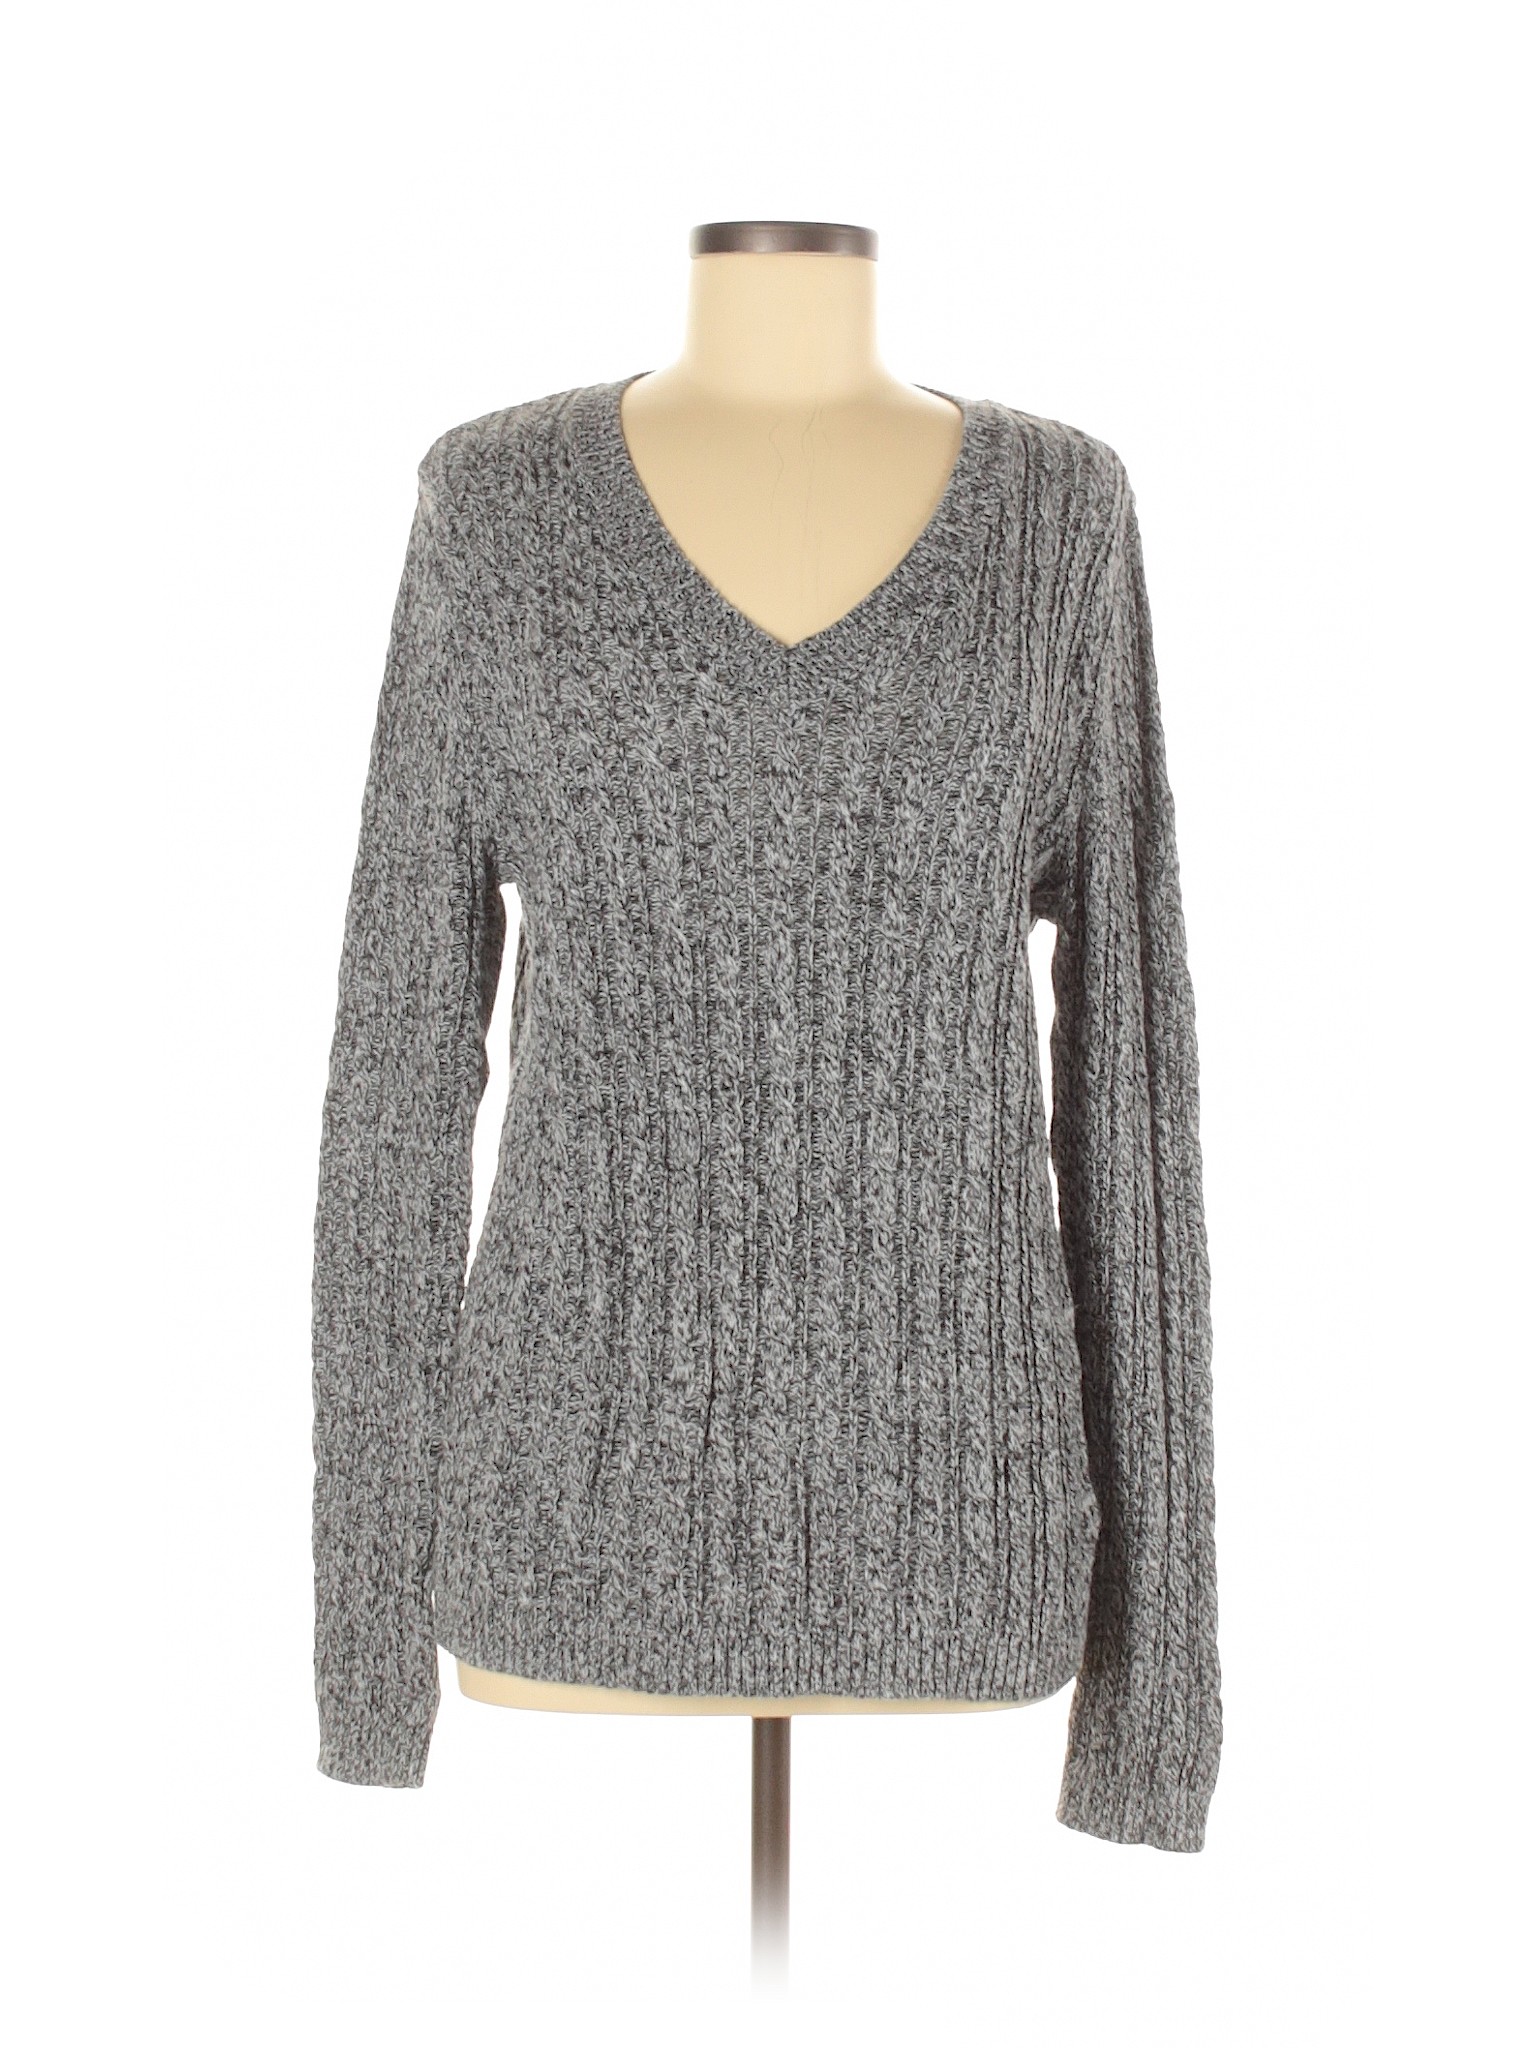 Croft & Barrow Women Gray Pullover Sweater M | eBay